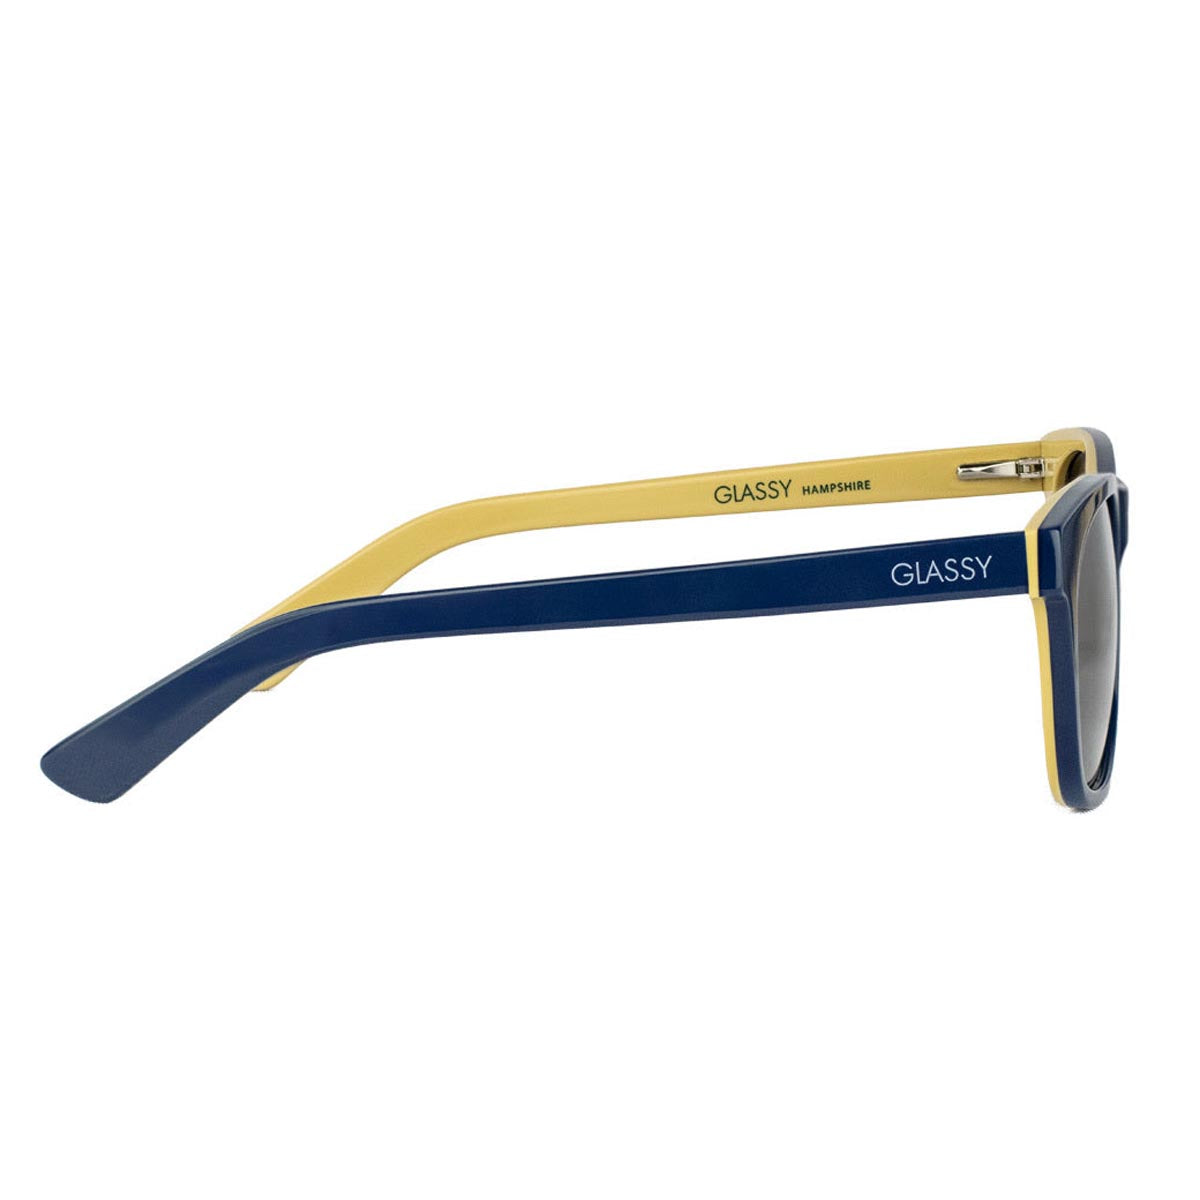 Glassy x Coors Banquet Hampshire Sunglasses - Blue image 5